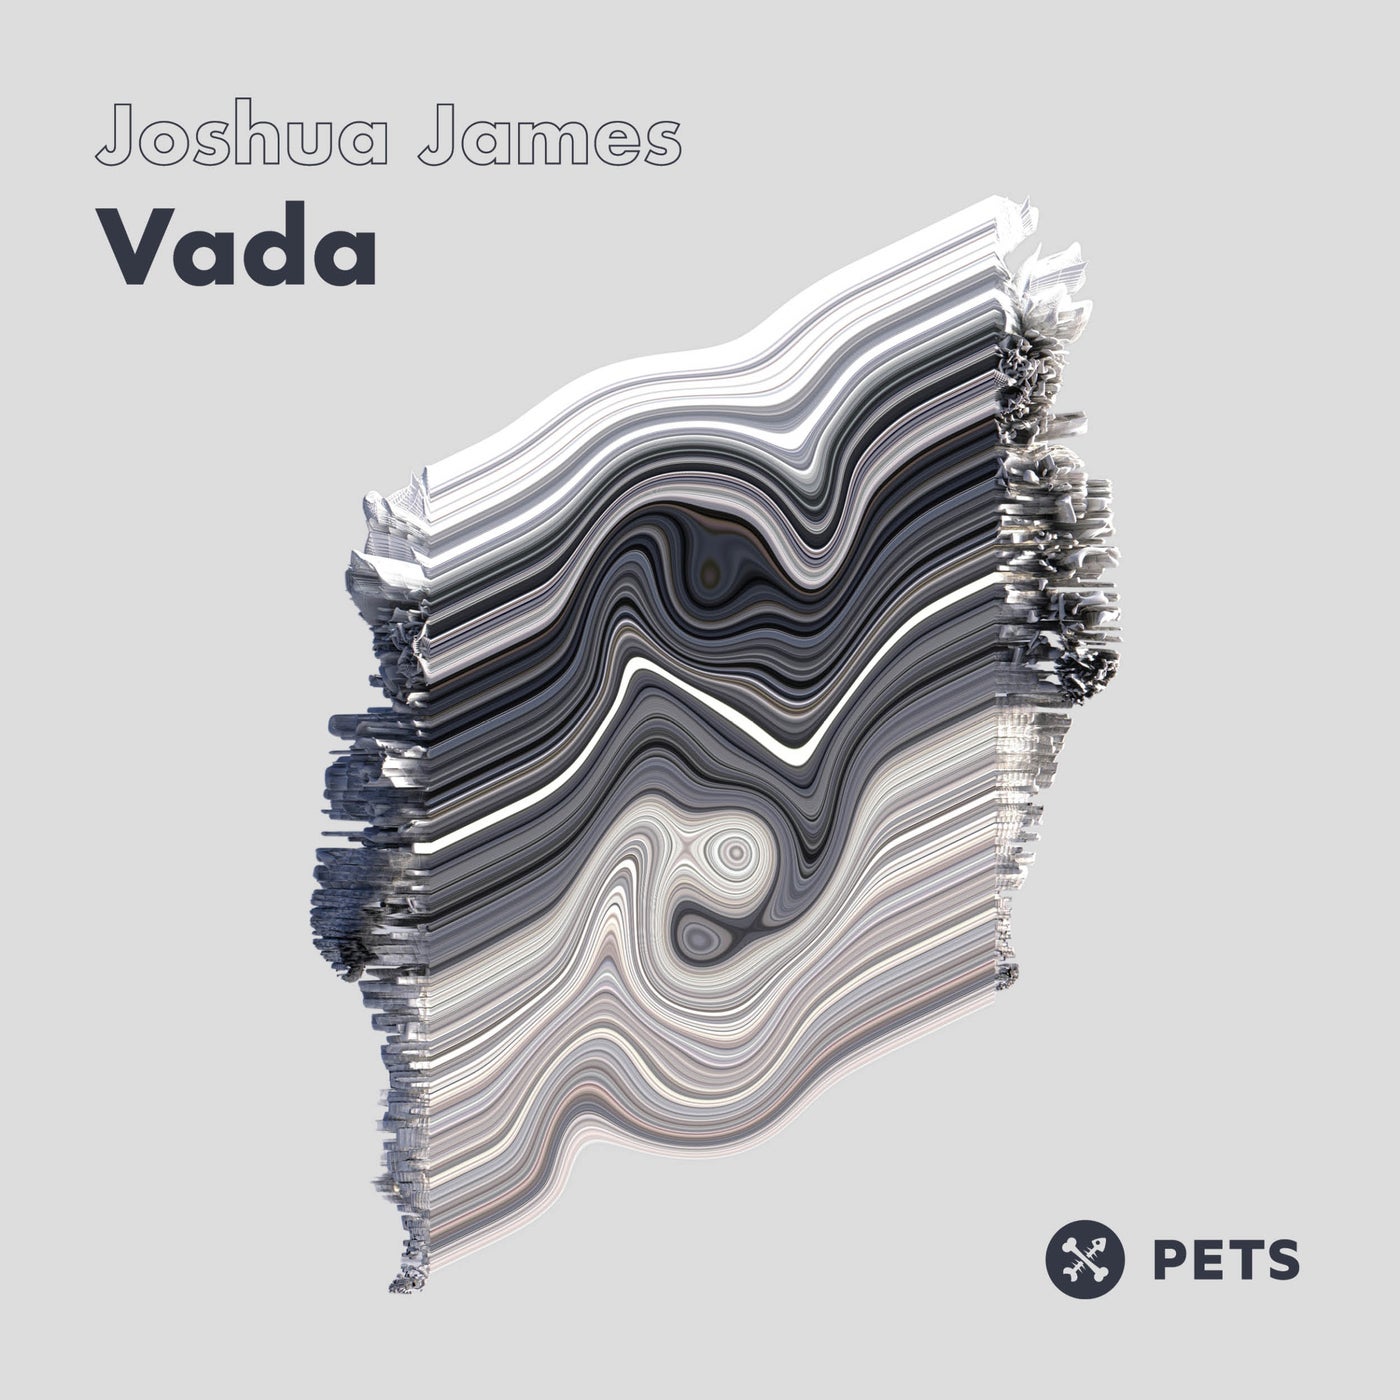 image cover: Joshua James - Vada EP on Pets Recordings